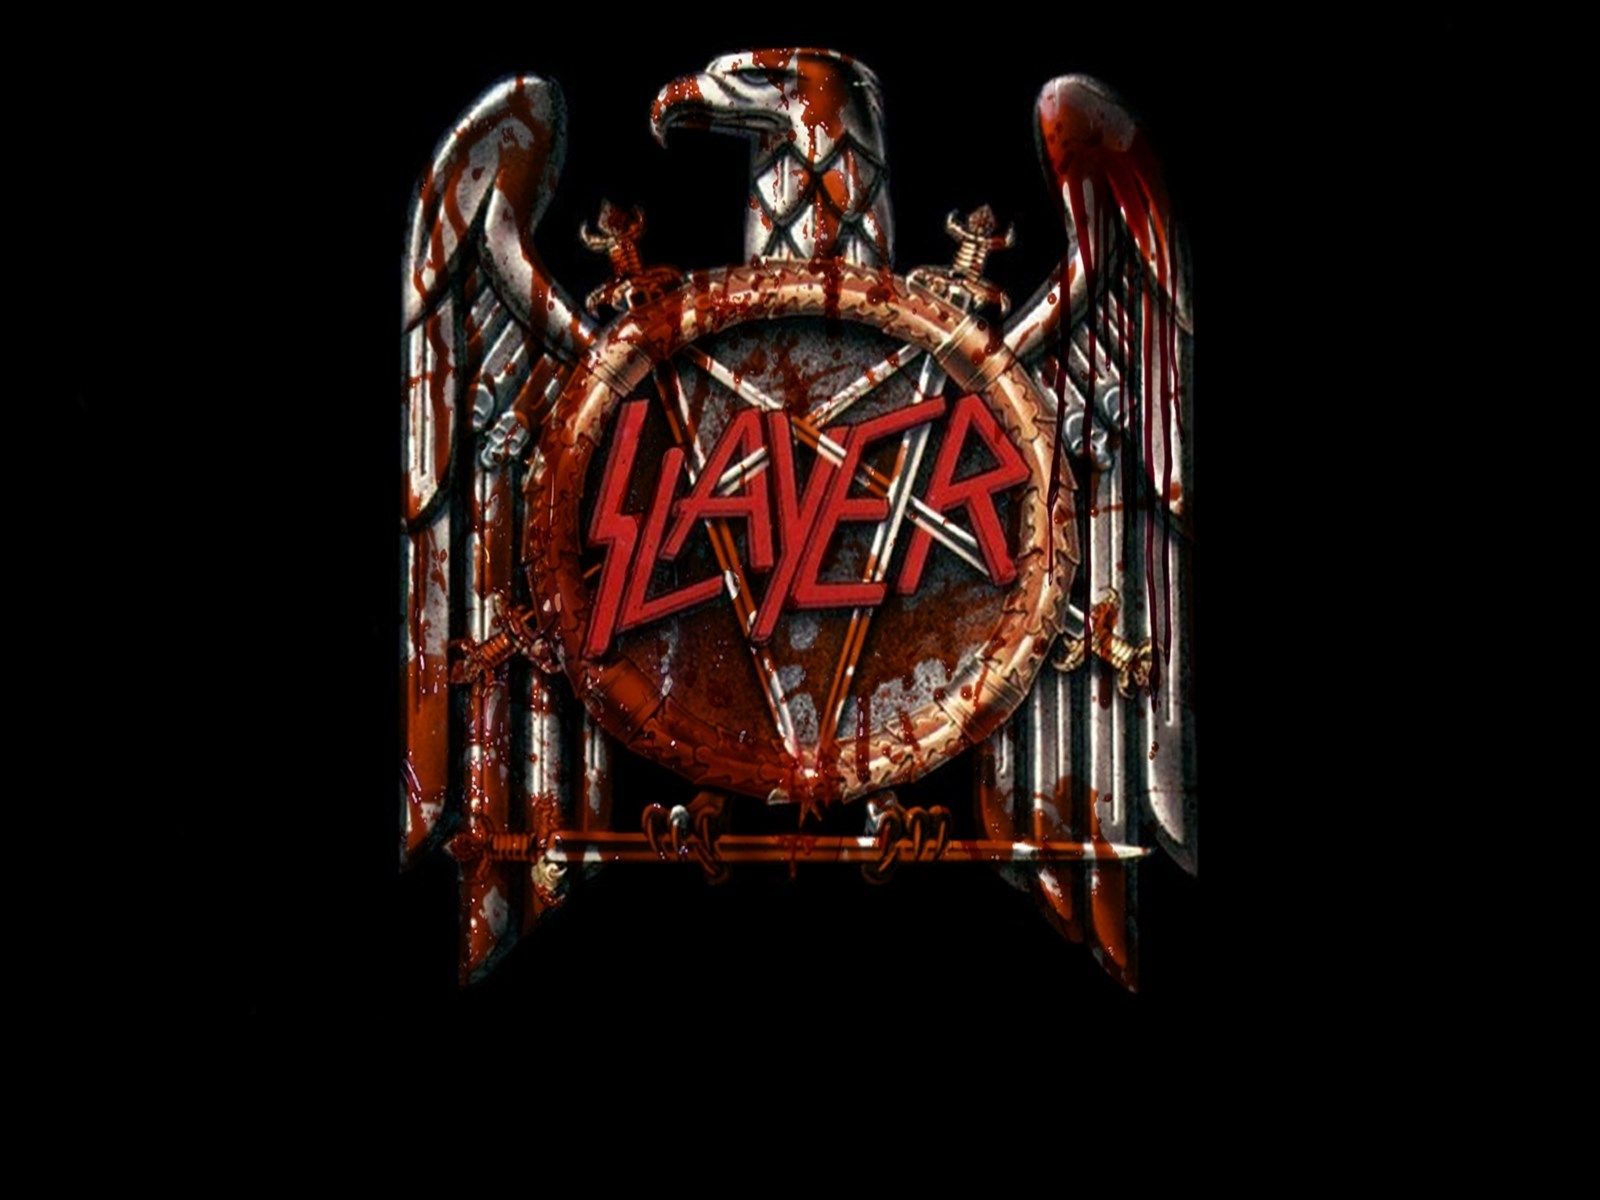 slayer band wallpaper. Slayer, Slayer band, Heavy metal music